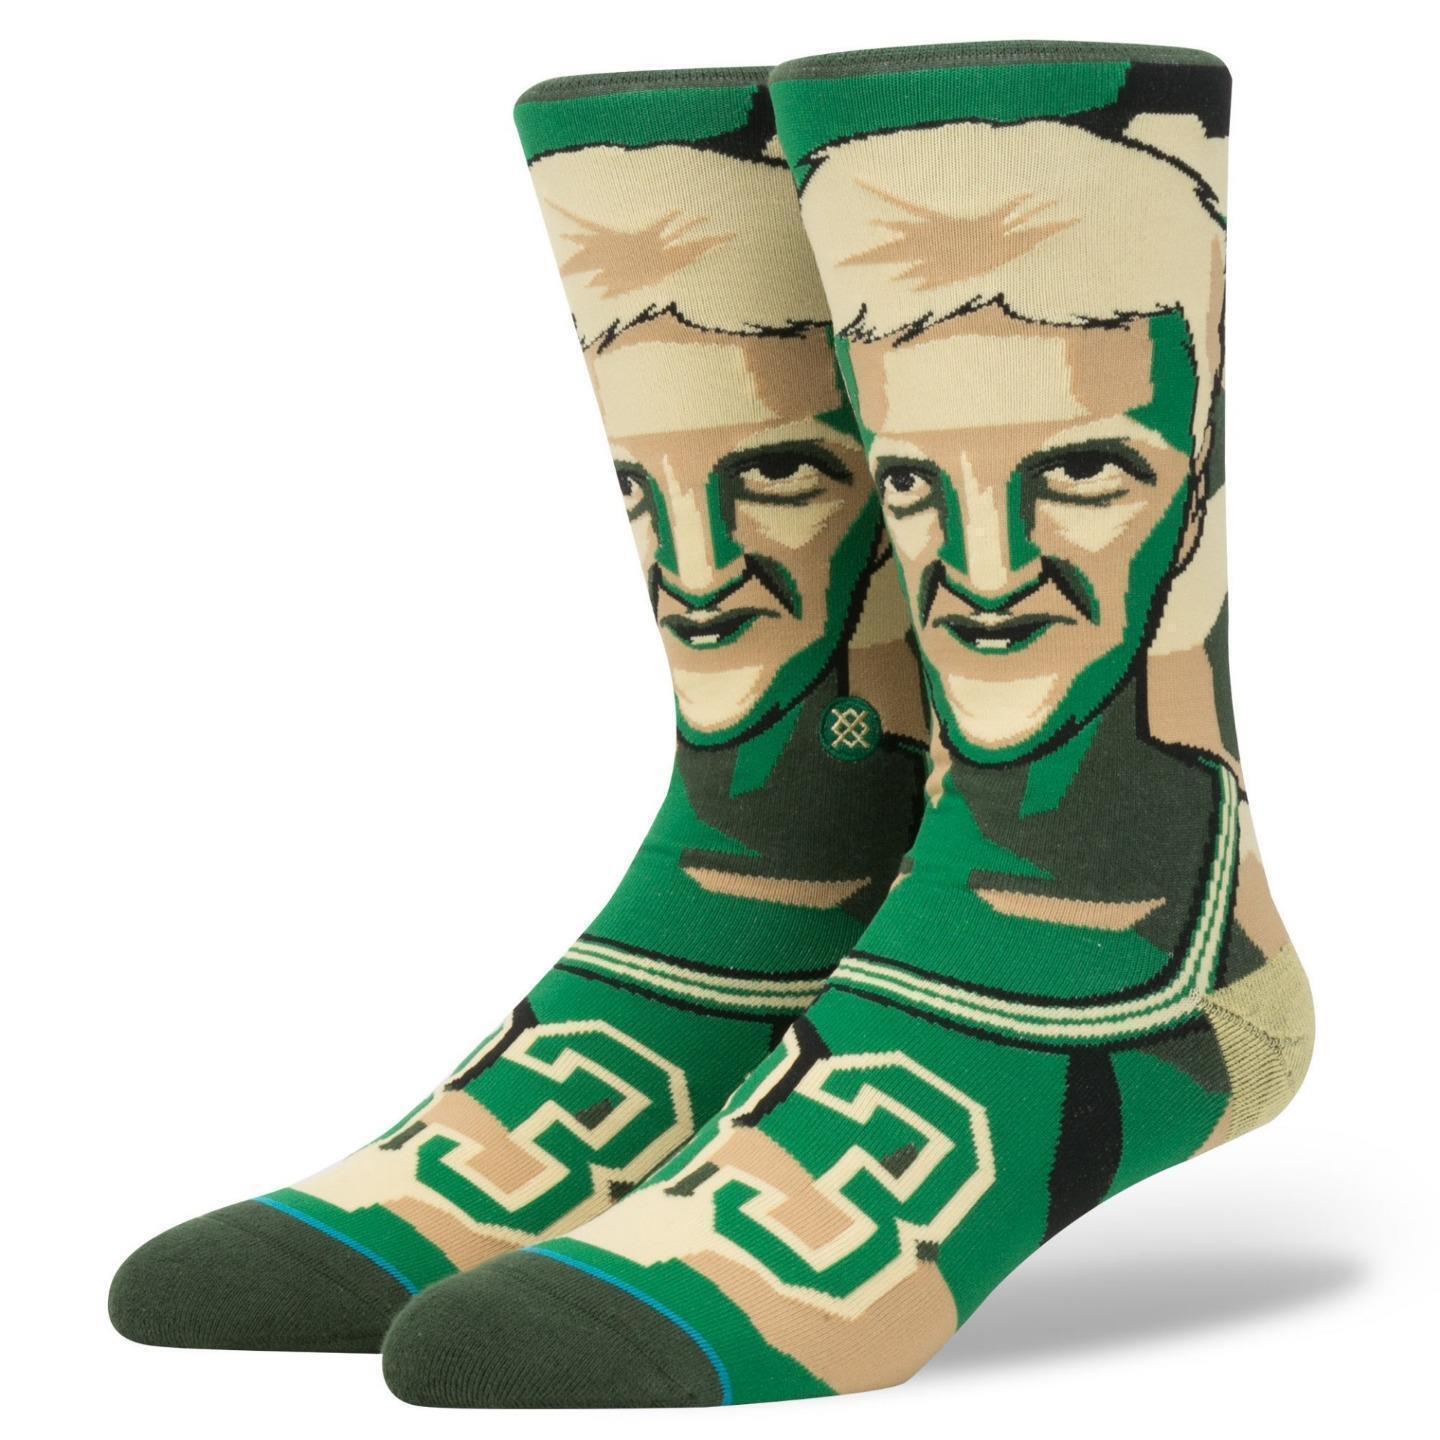 Glamorous Larry Bird Basketball Celtics Socks Stance Men’s NEW NWT Size M Medium 6-8.5 on eBay